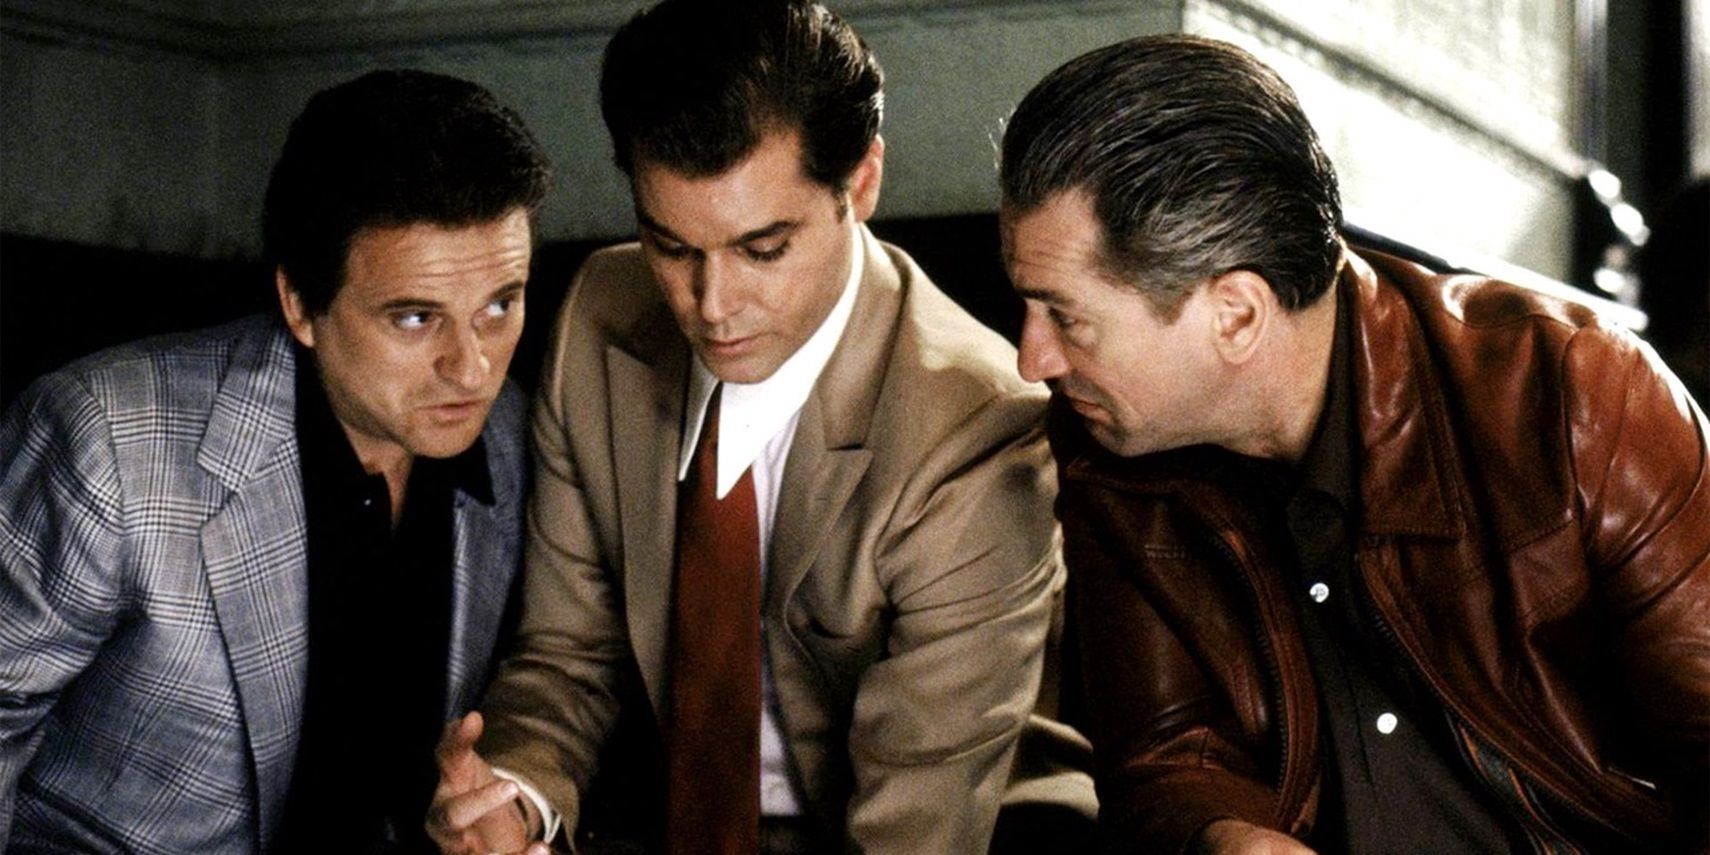 Joe Pesci, Ray Liotta and Robert De Niro looking into the bag in Goodfellas